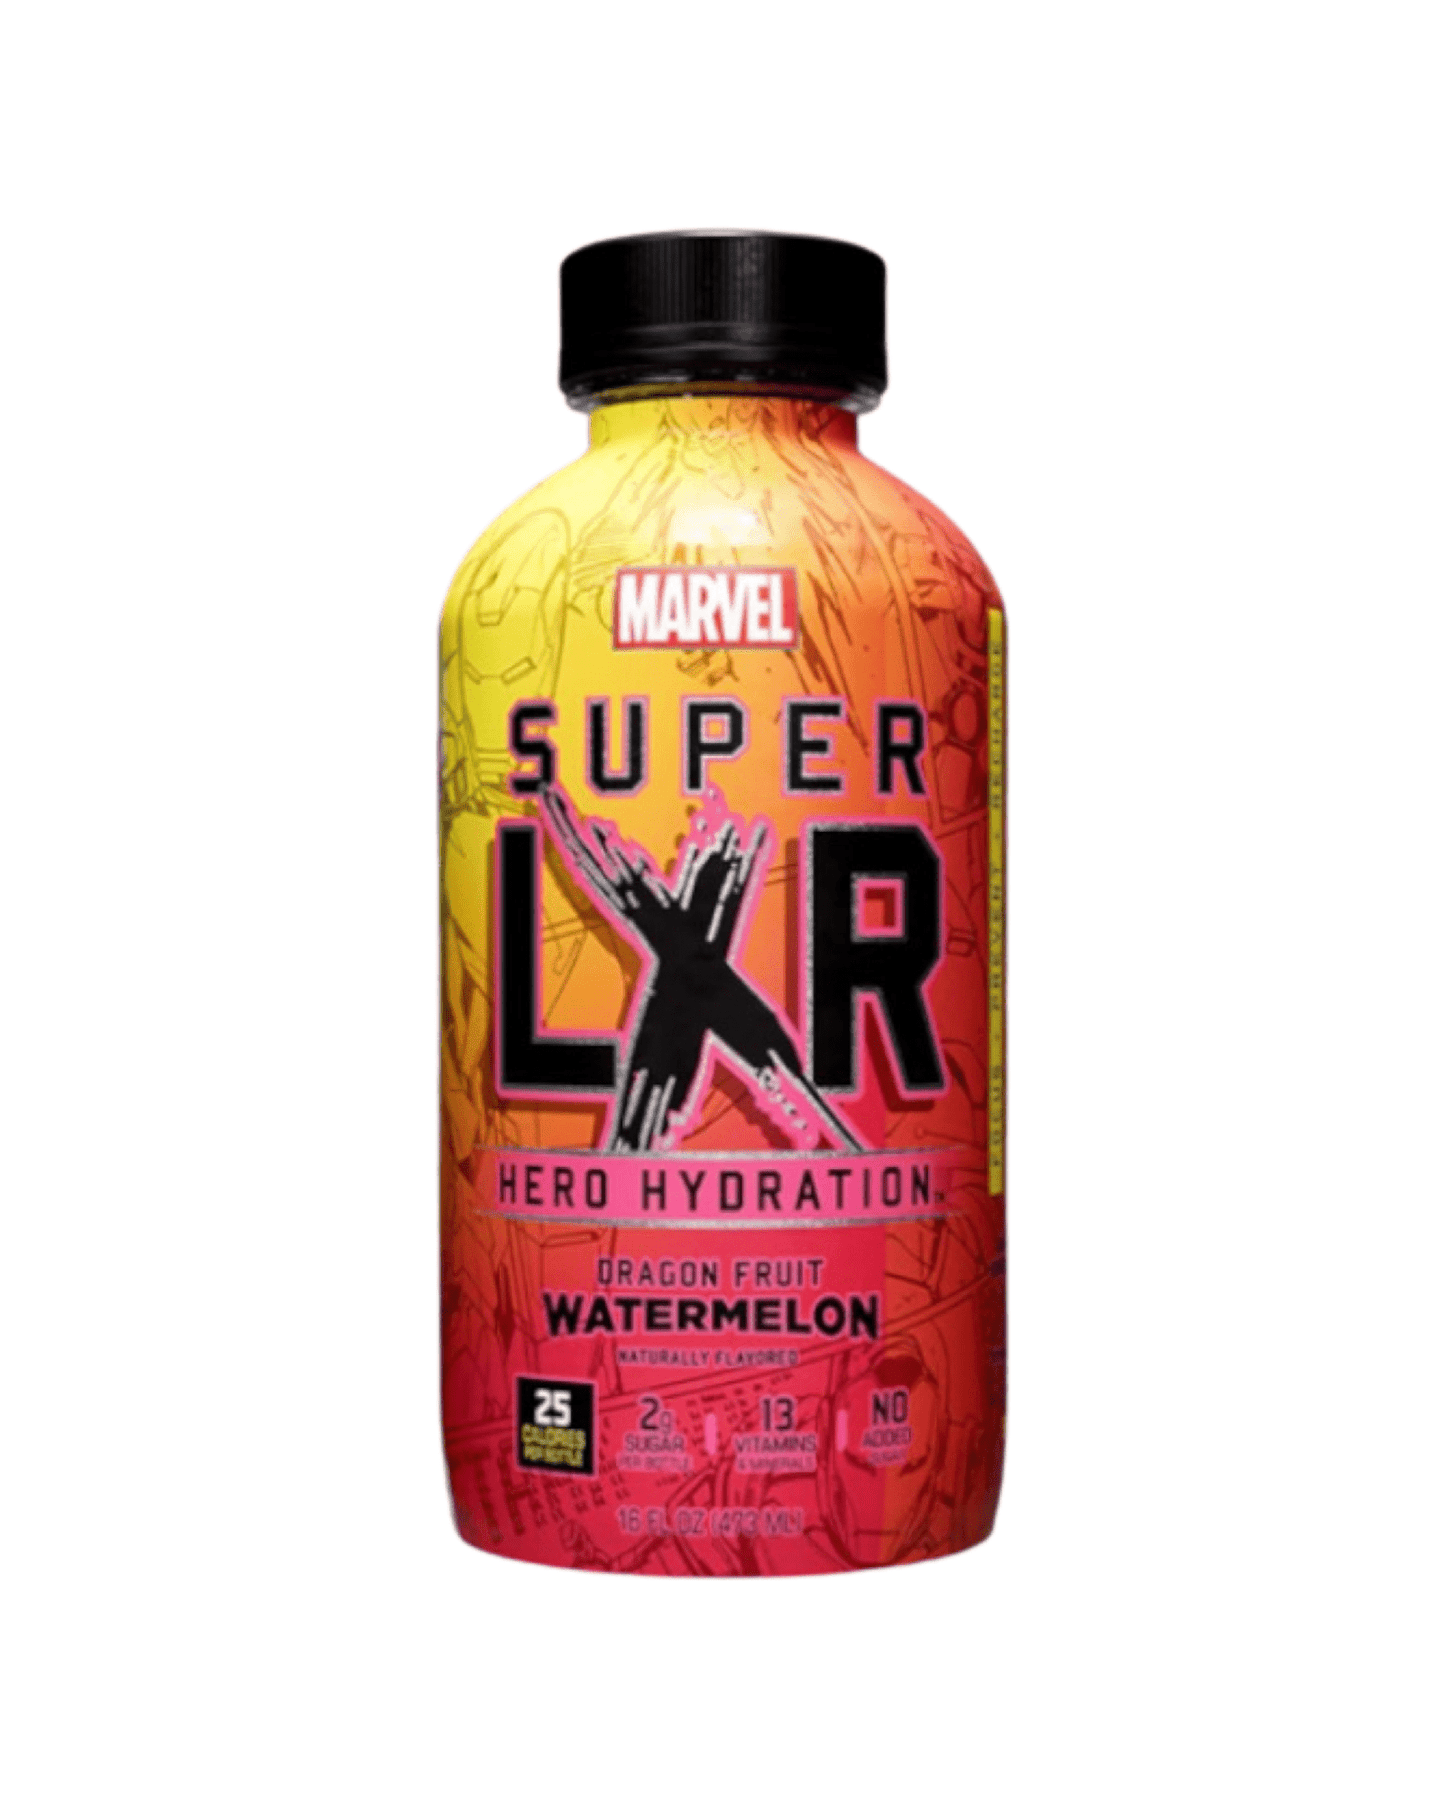 AriZona x Marvel Super LXR Hydration “Dragon Fruit Watermelon “ (Rare American) - Exotic Soda Company